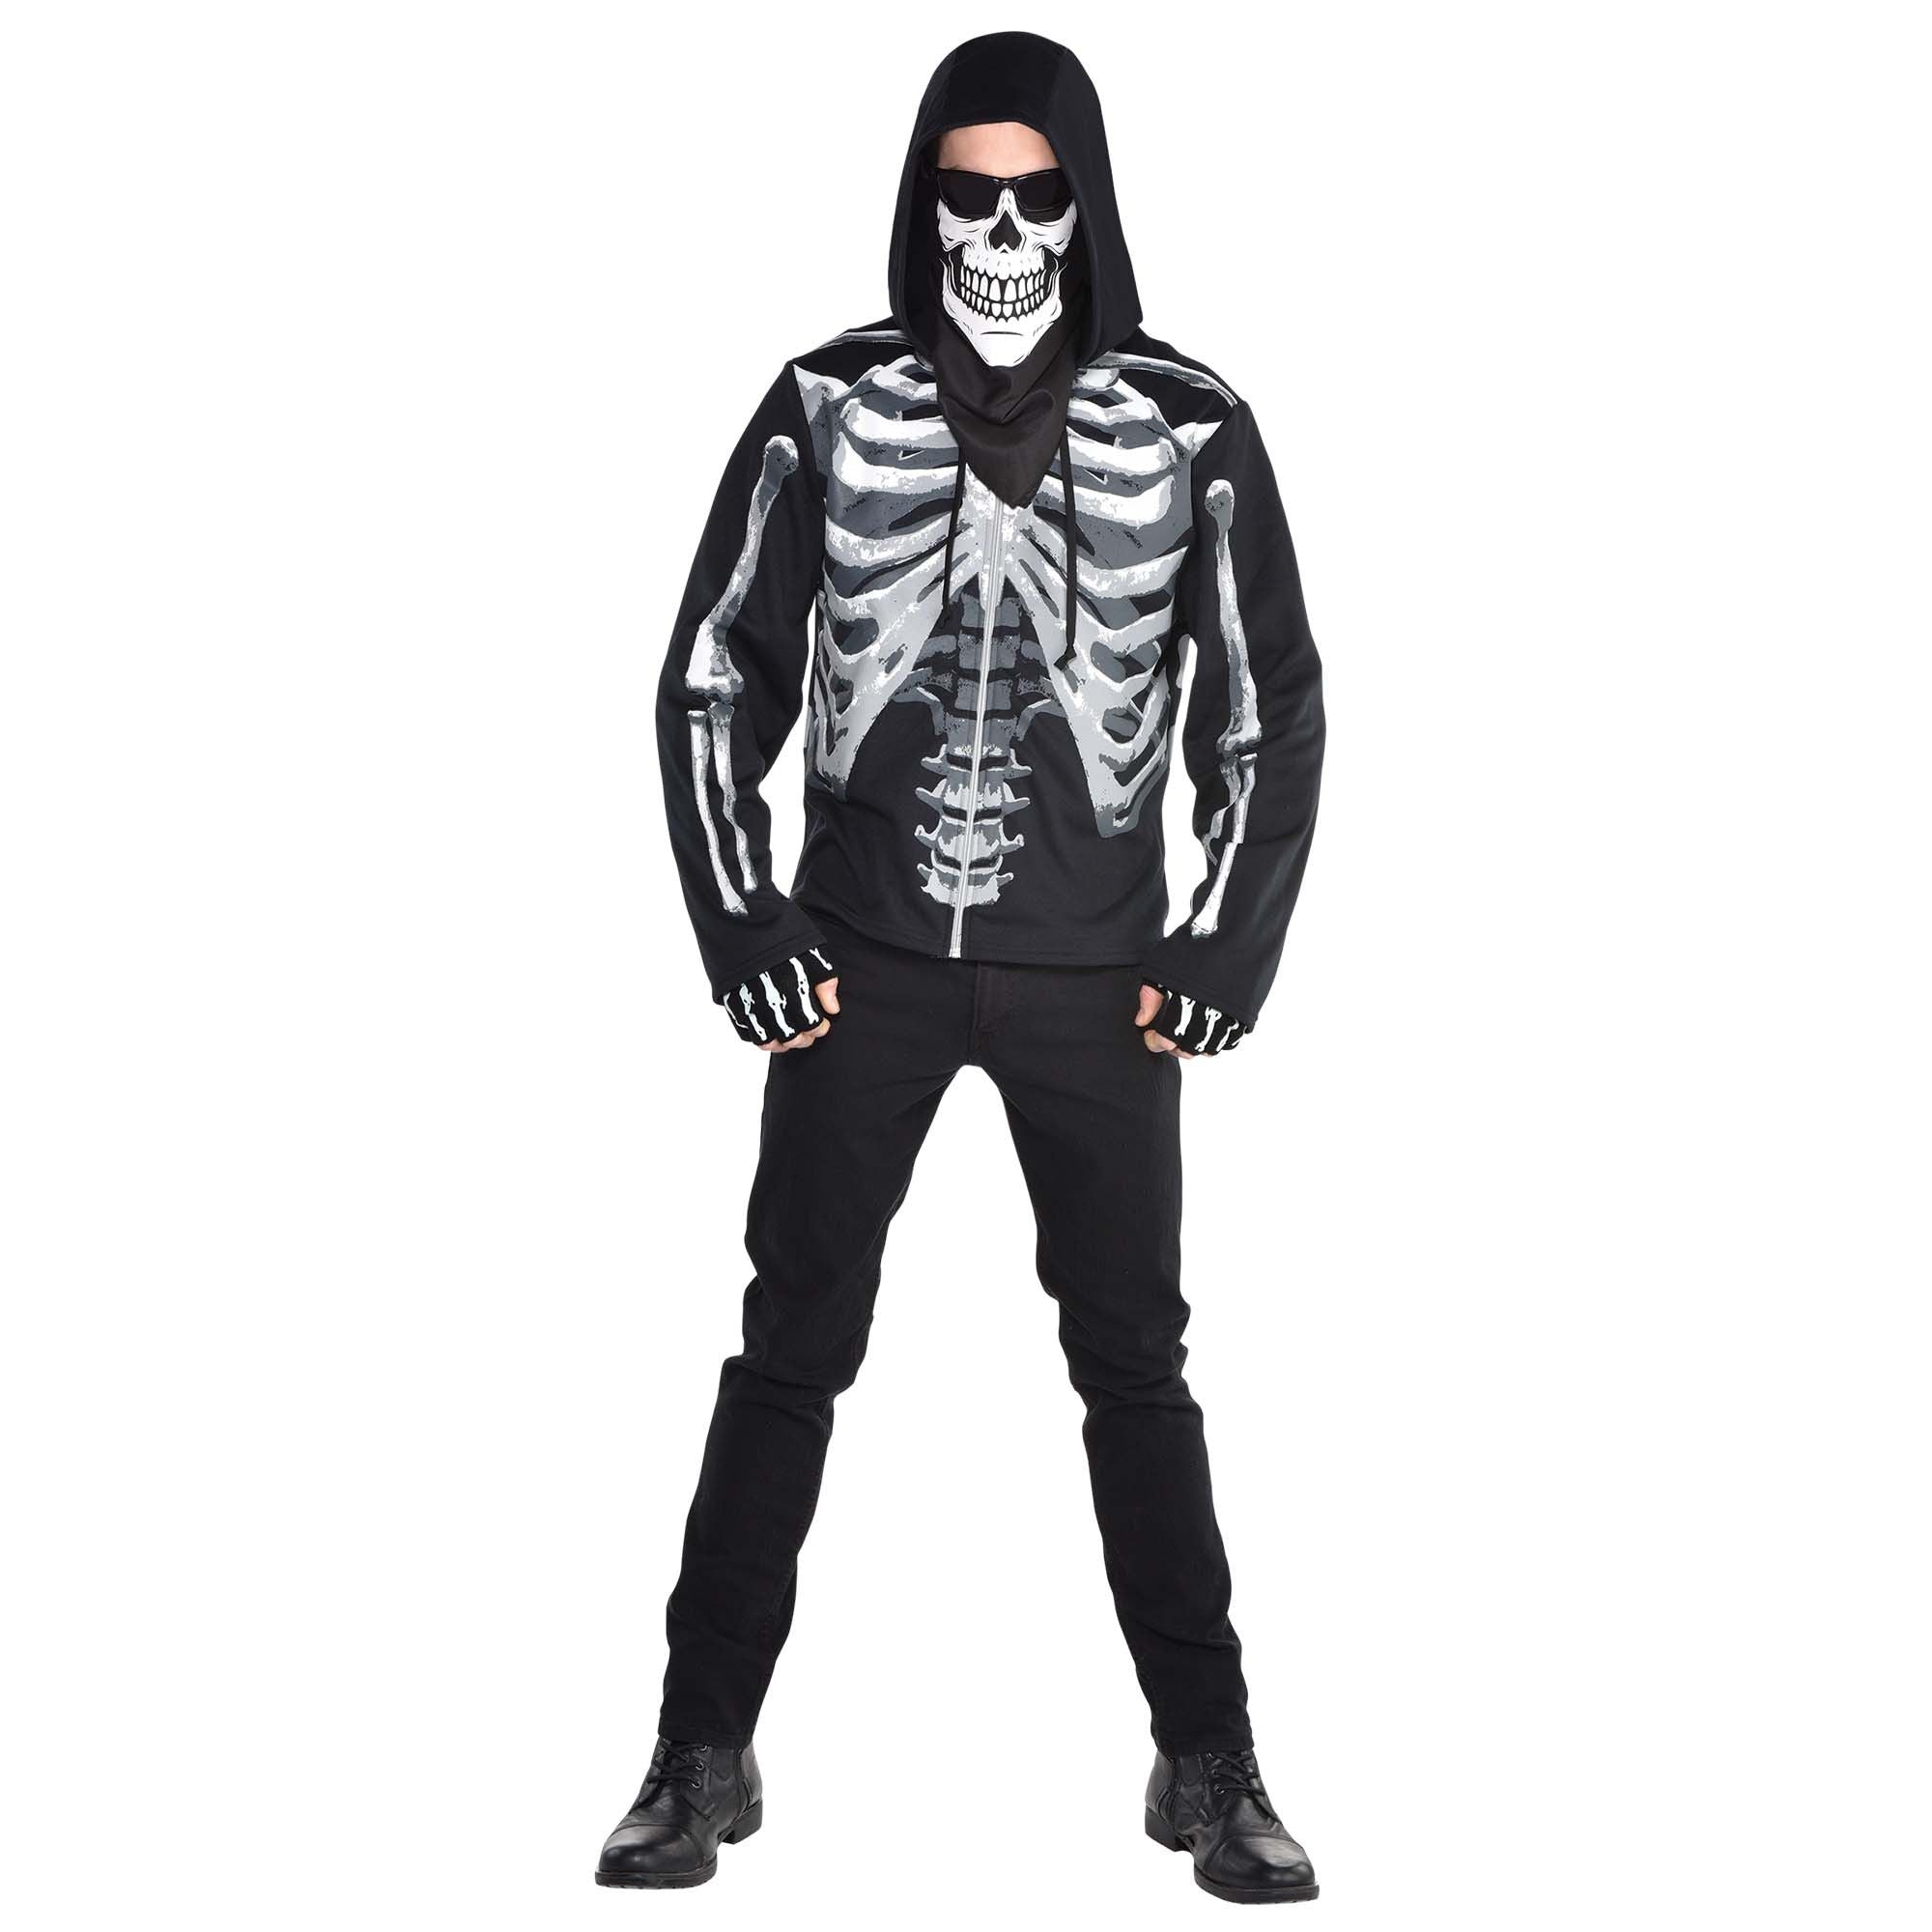 Amscan COSTUMES: MASKS Black and White Skeleton Bandana Mask